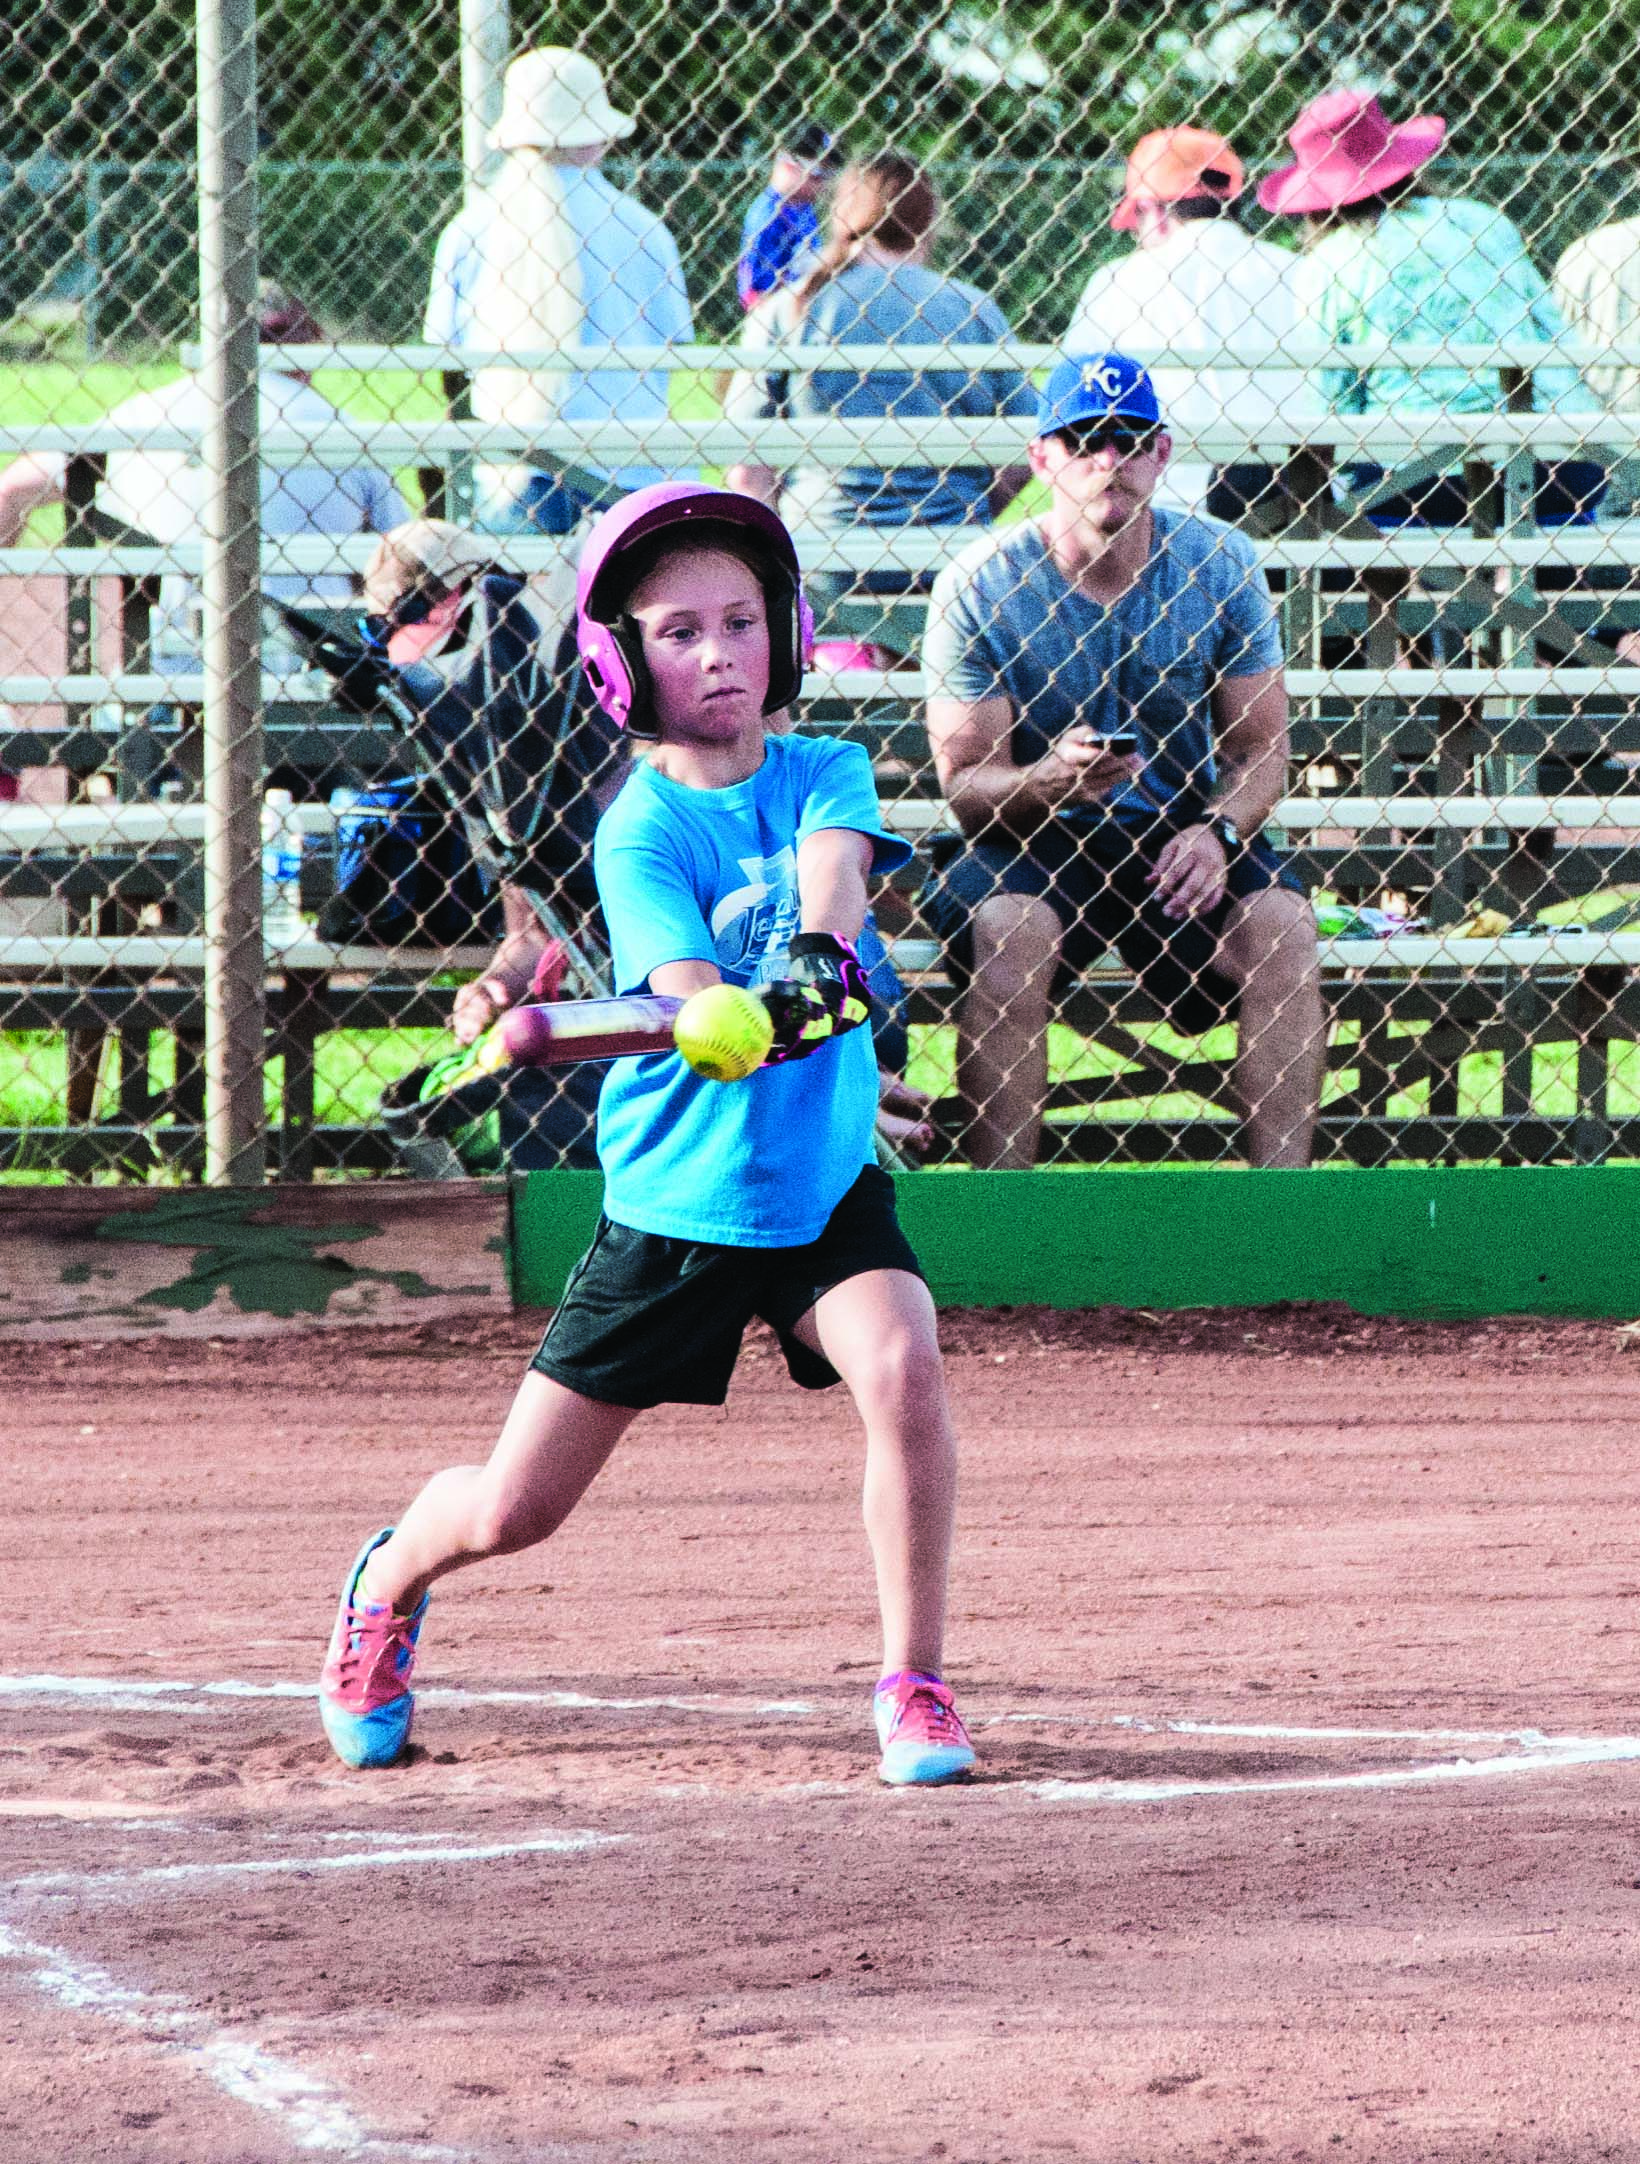 Youth Baseball and Softball League